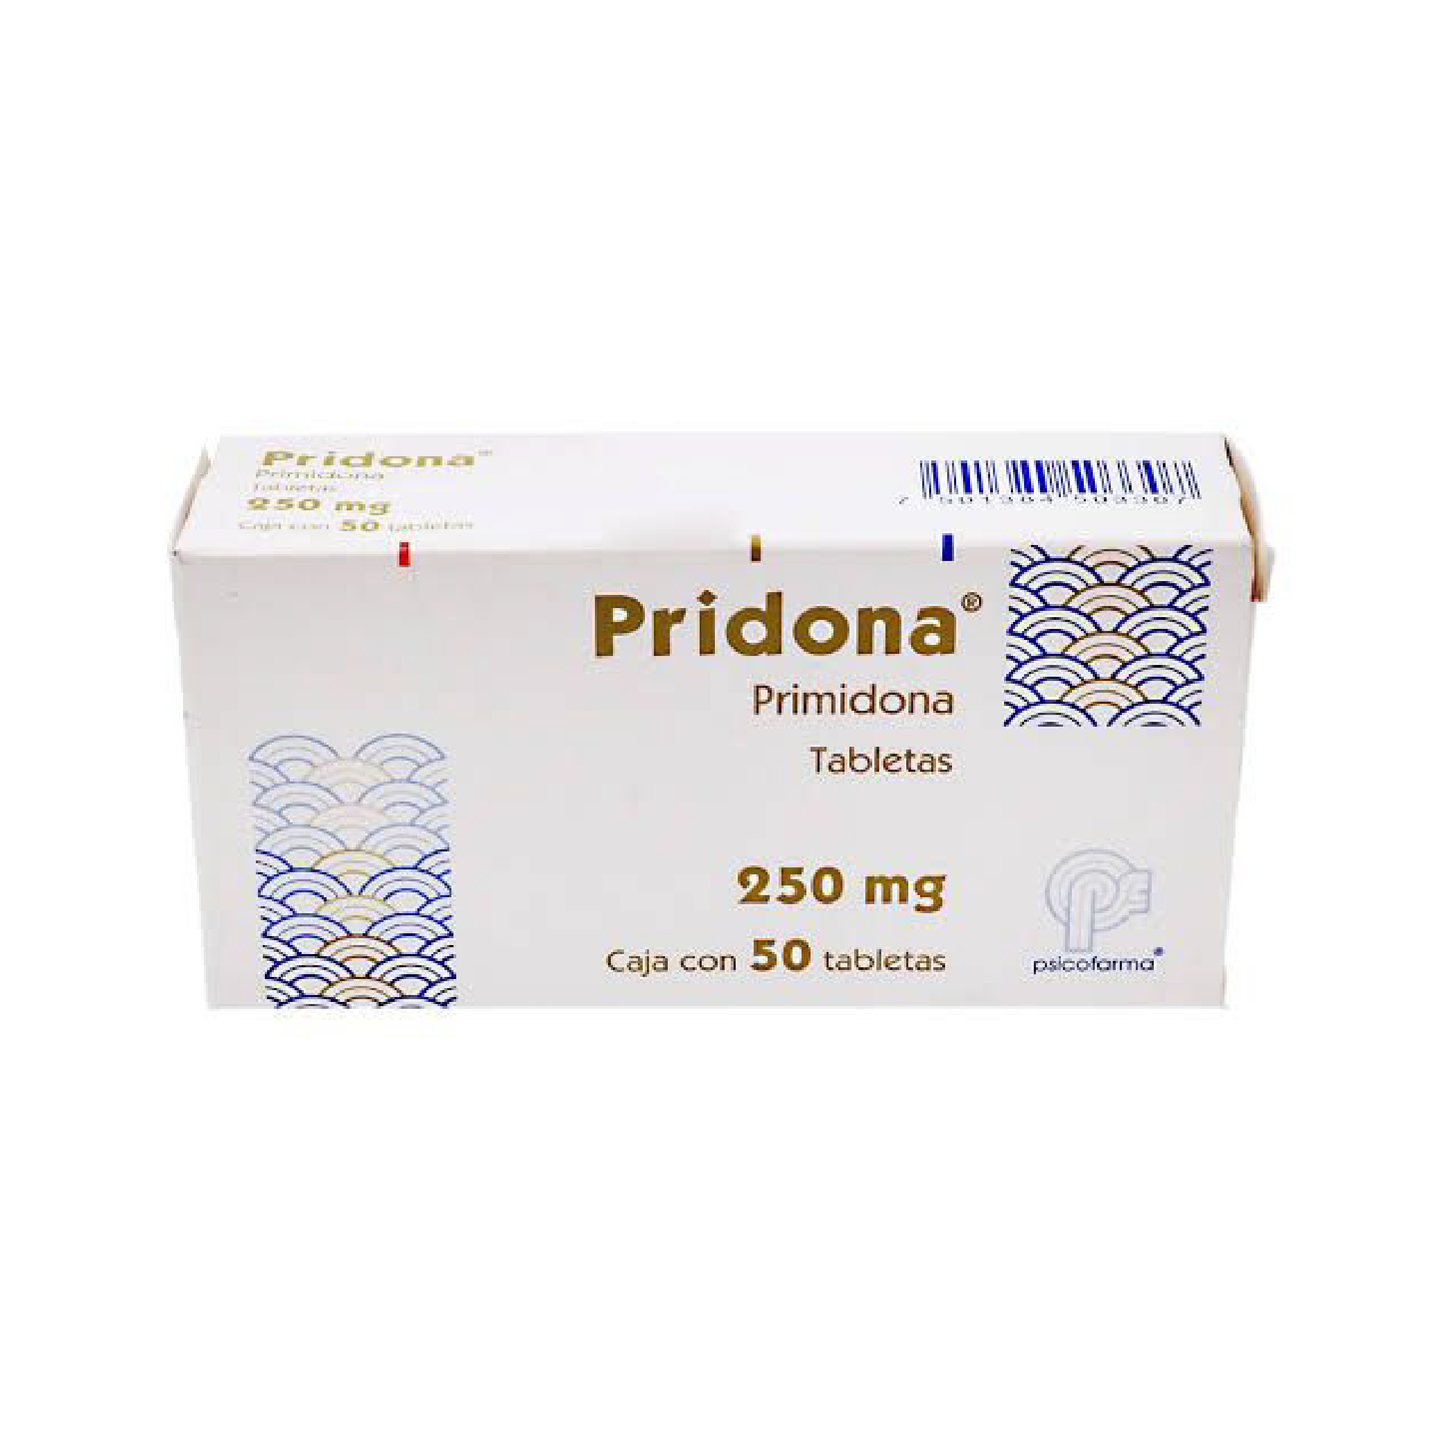 Pridona (Primidona) Tabs 250 mg Cja c/50 tabs